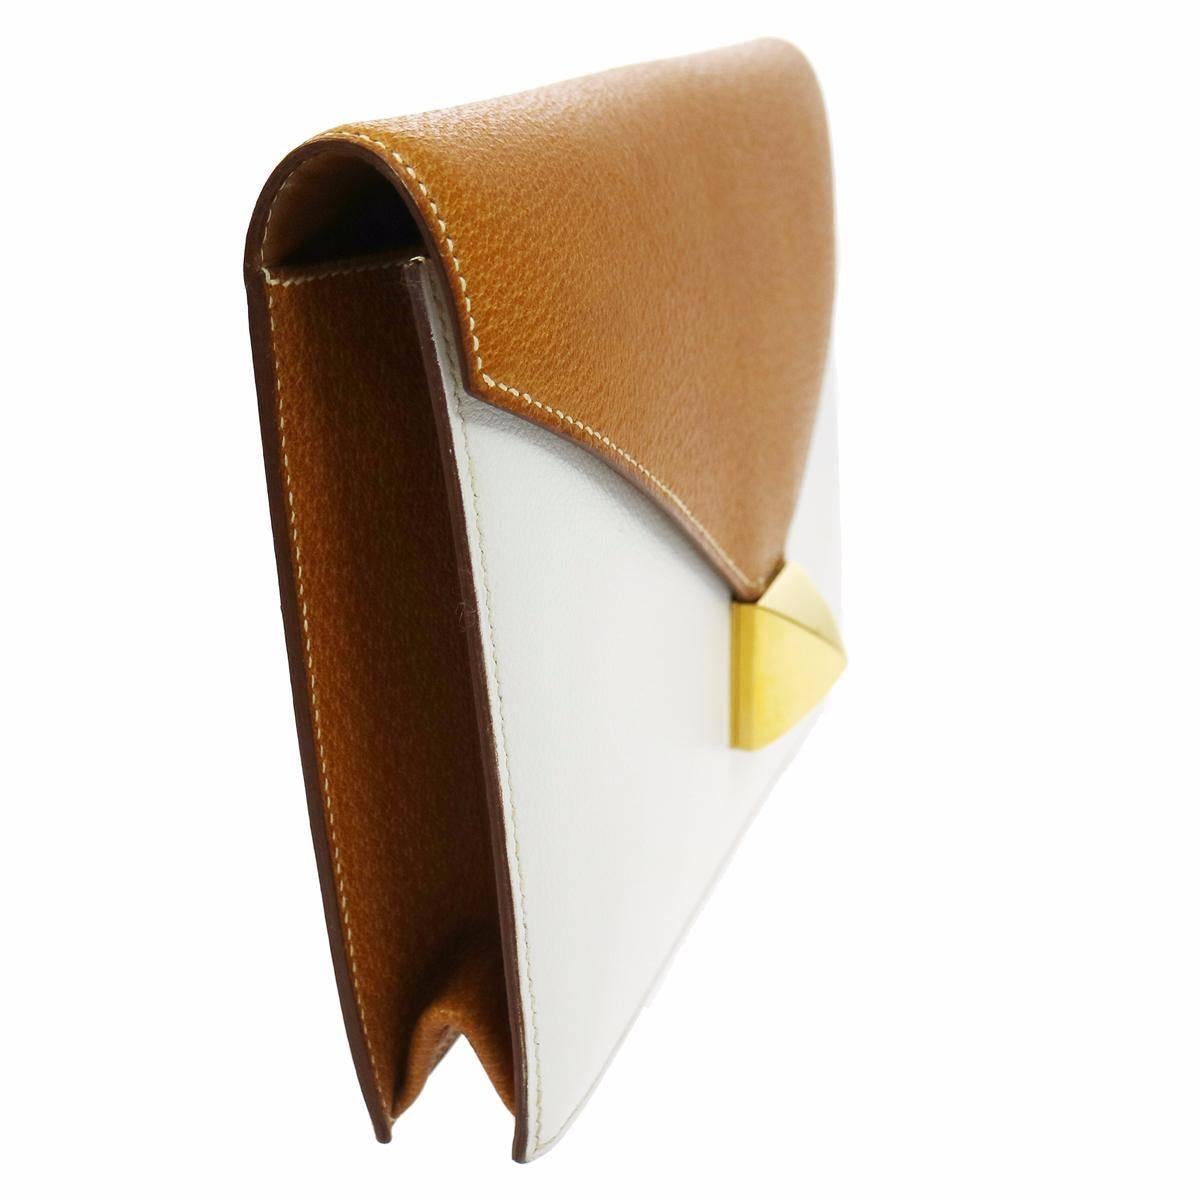 Gray Hermes Cognac Colorblock Leather Envelope Evening Clutch Bag